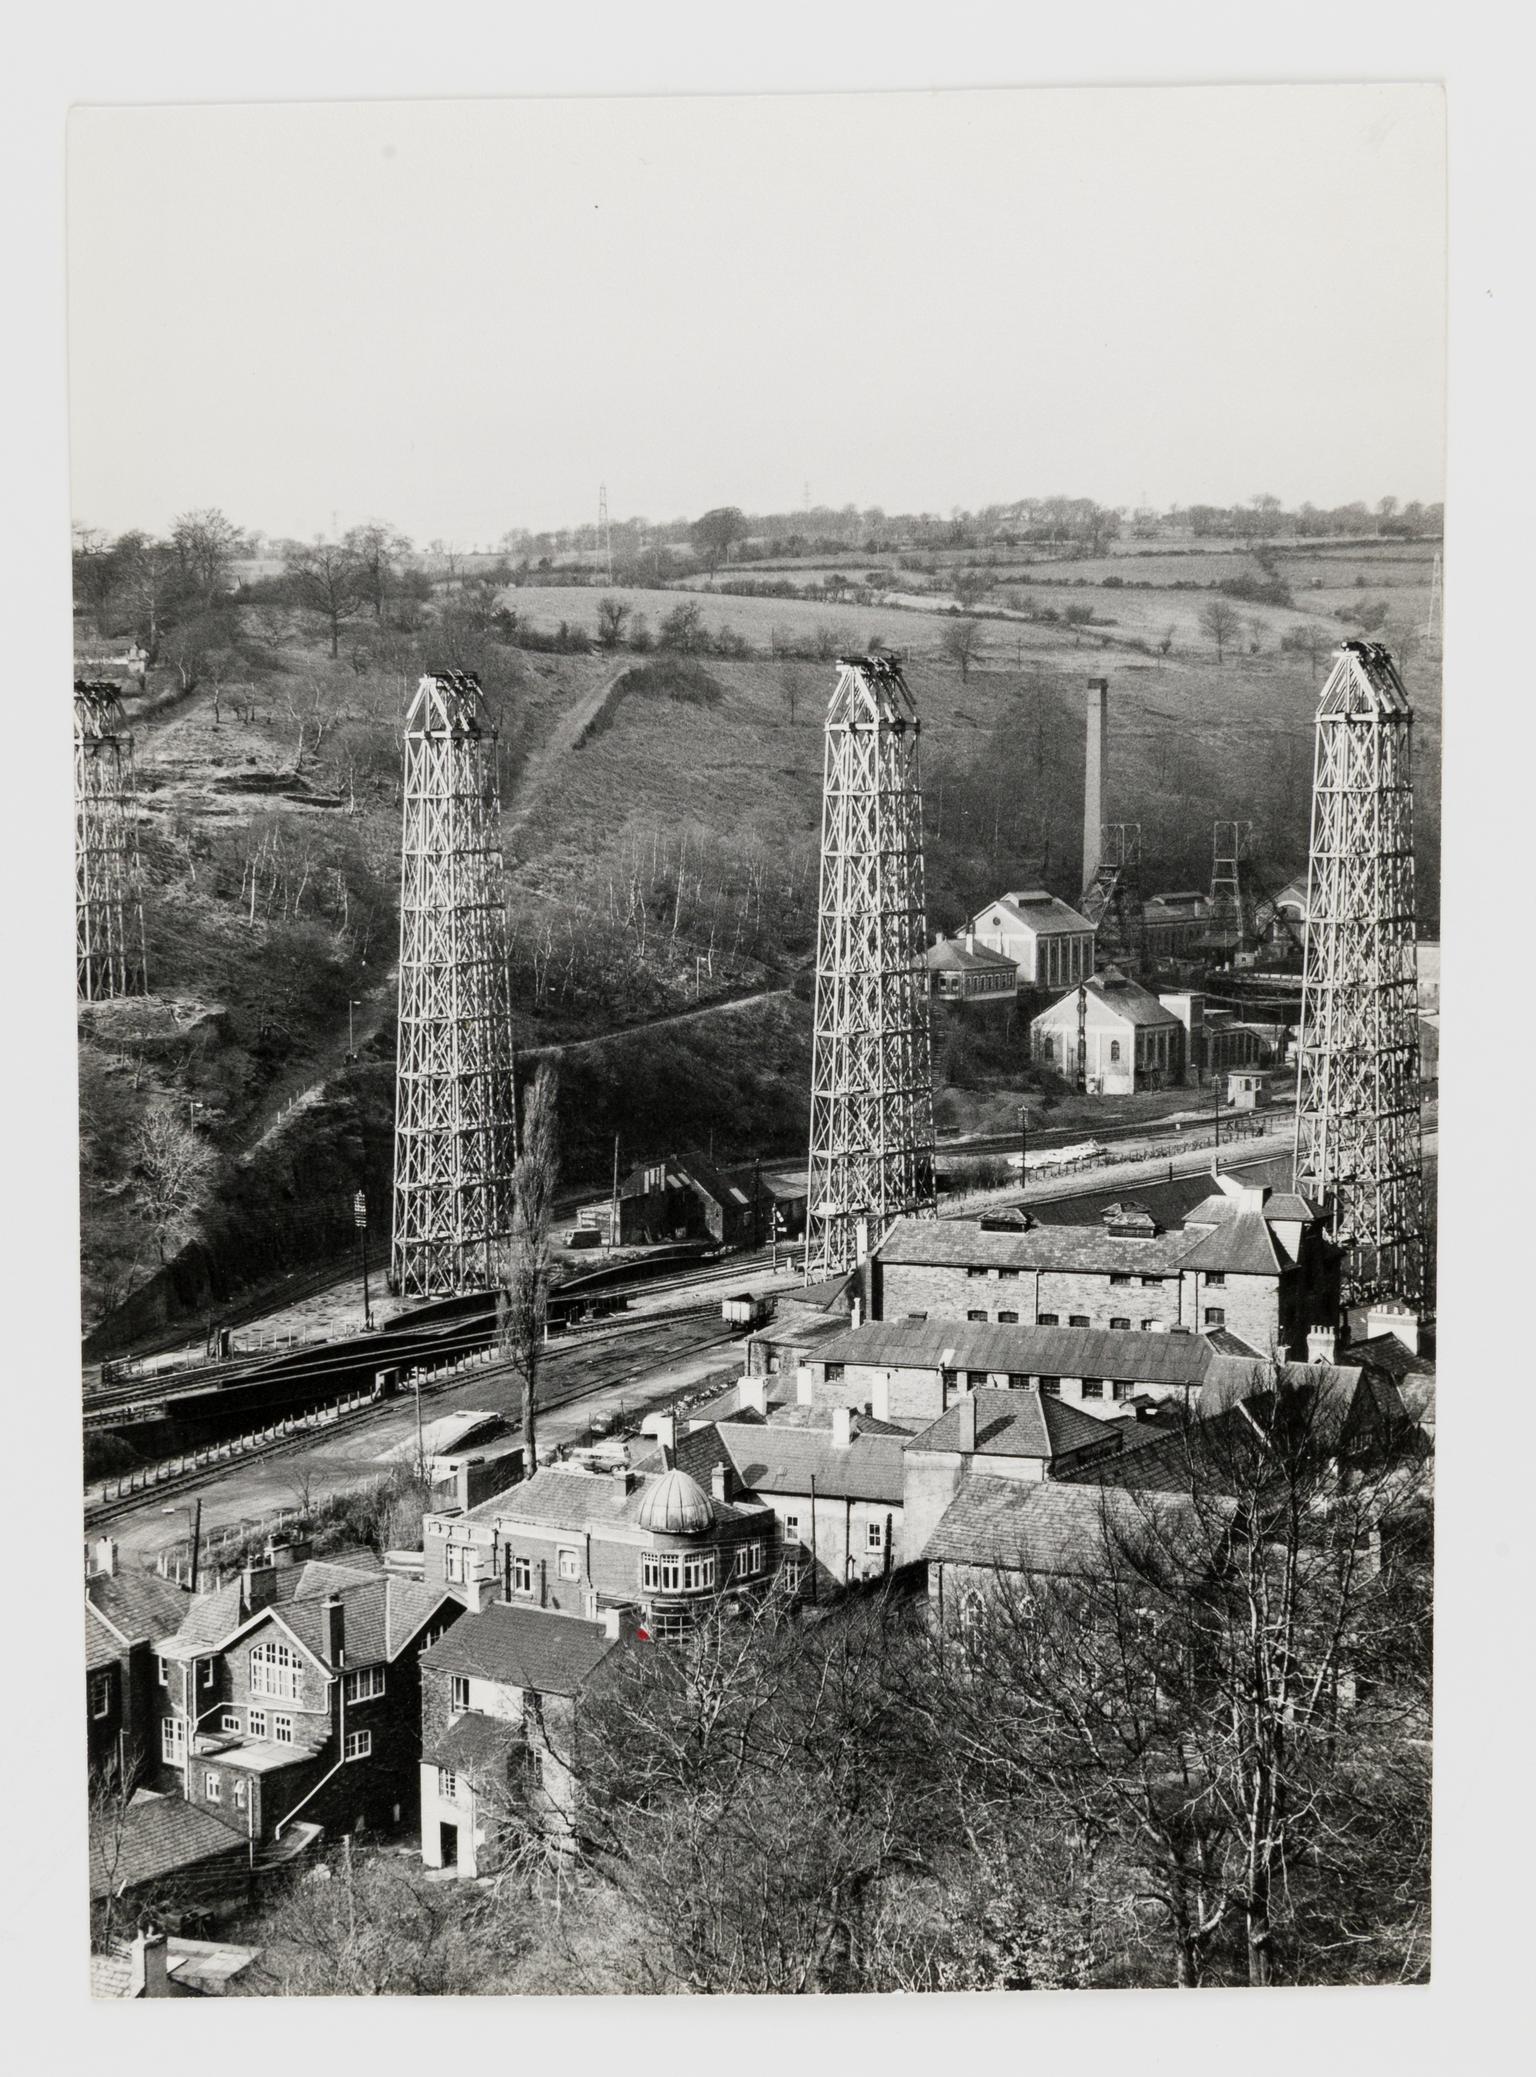 Demolition of Crumlin viaduct, photograph